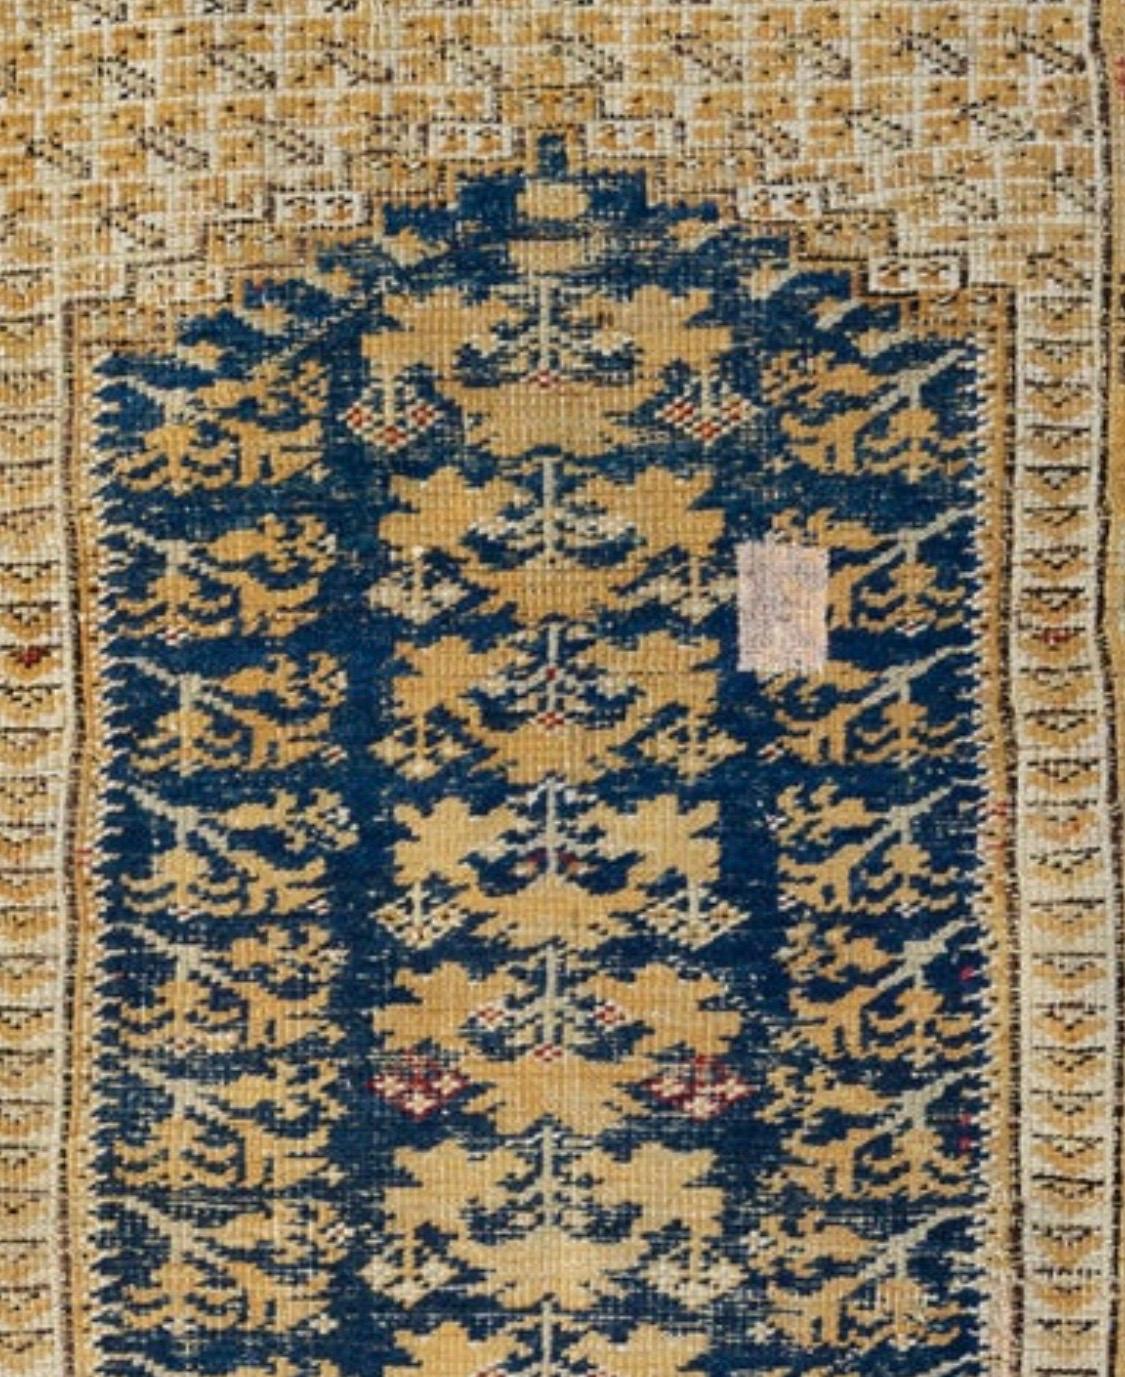 Antique navy blue ivory beige Turkish Kula Area rug, circa 1880s. It measures 3.11 x 5.8 ft.
   